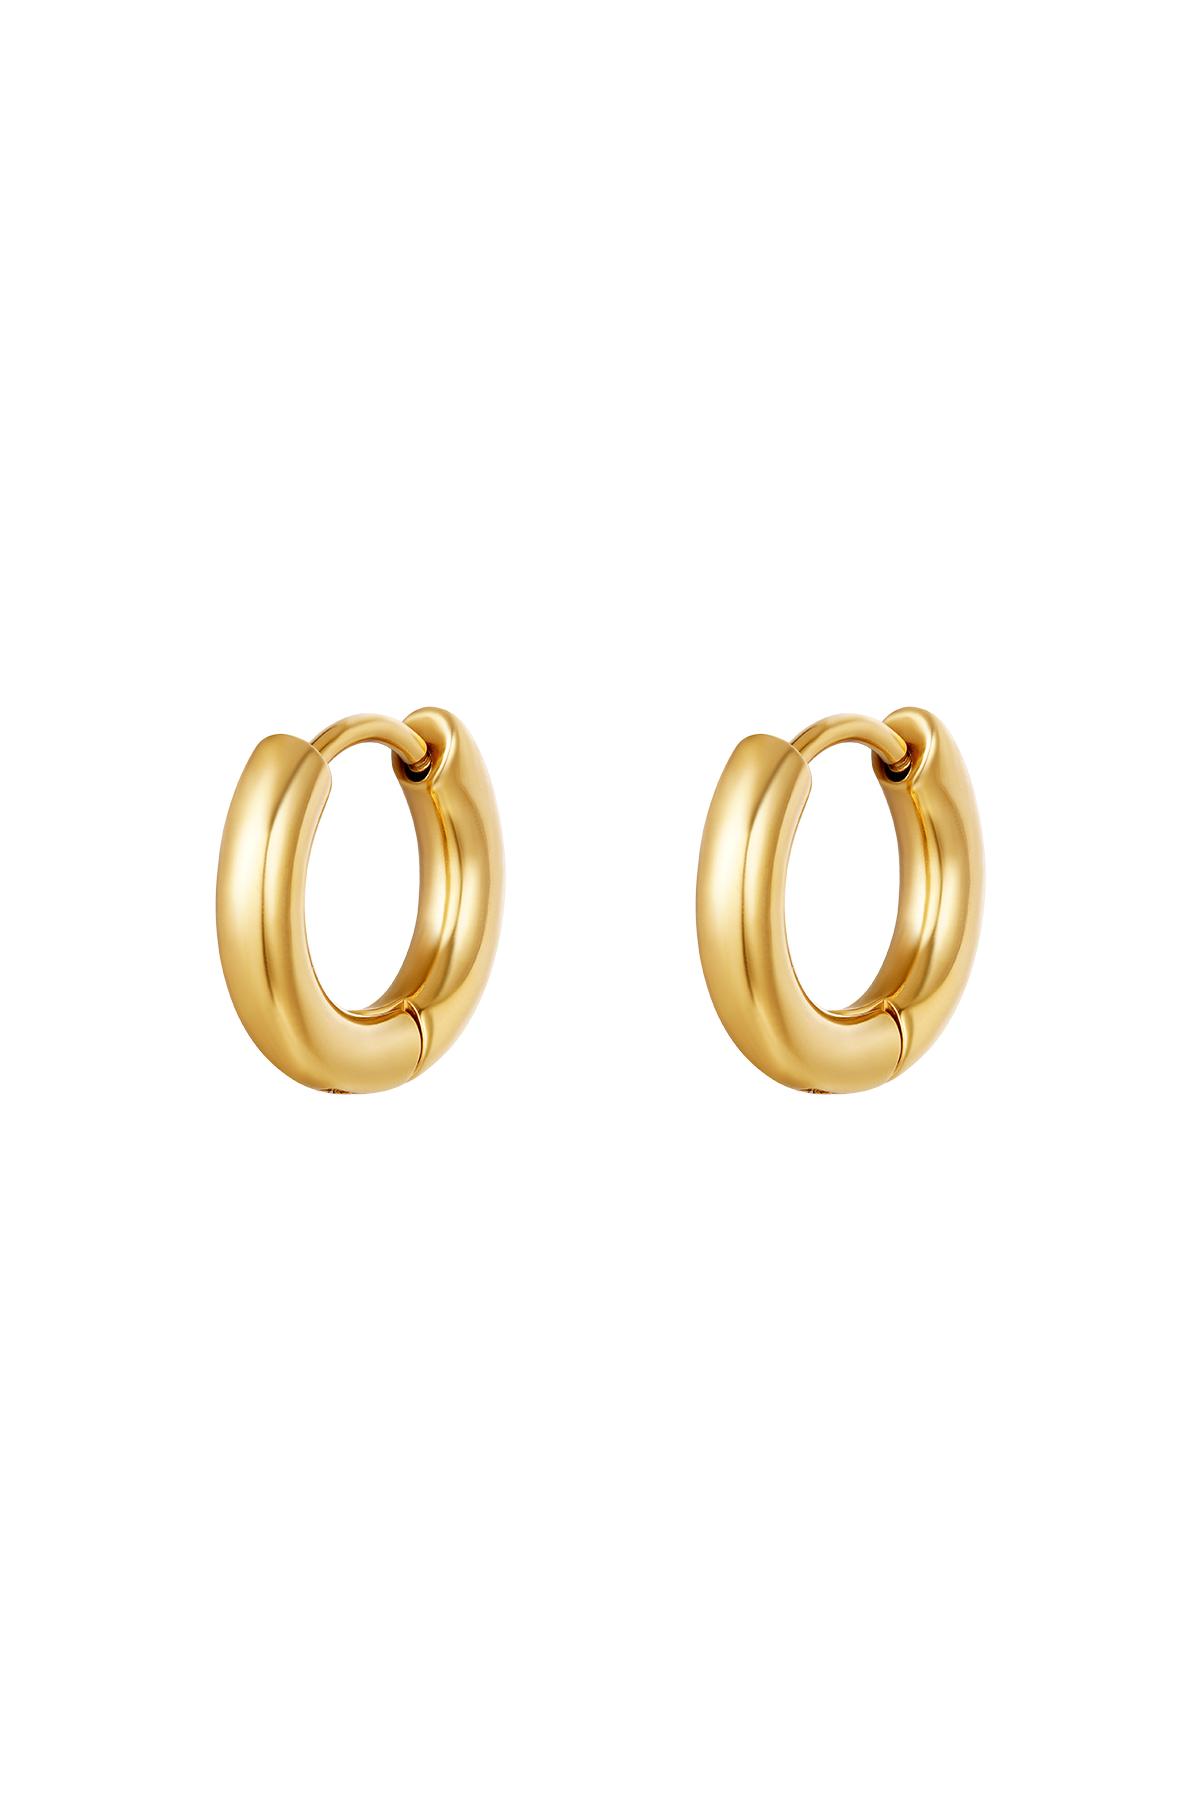 Basic creoles earrings - mini Gold Stainless Steel h5 